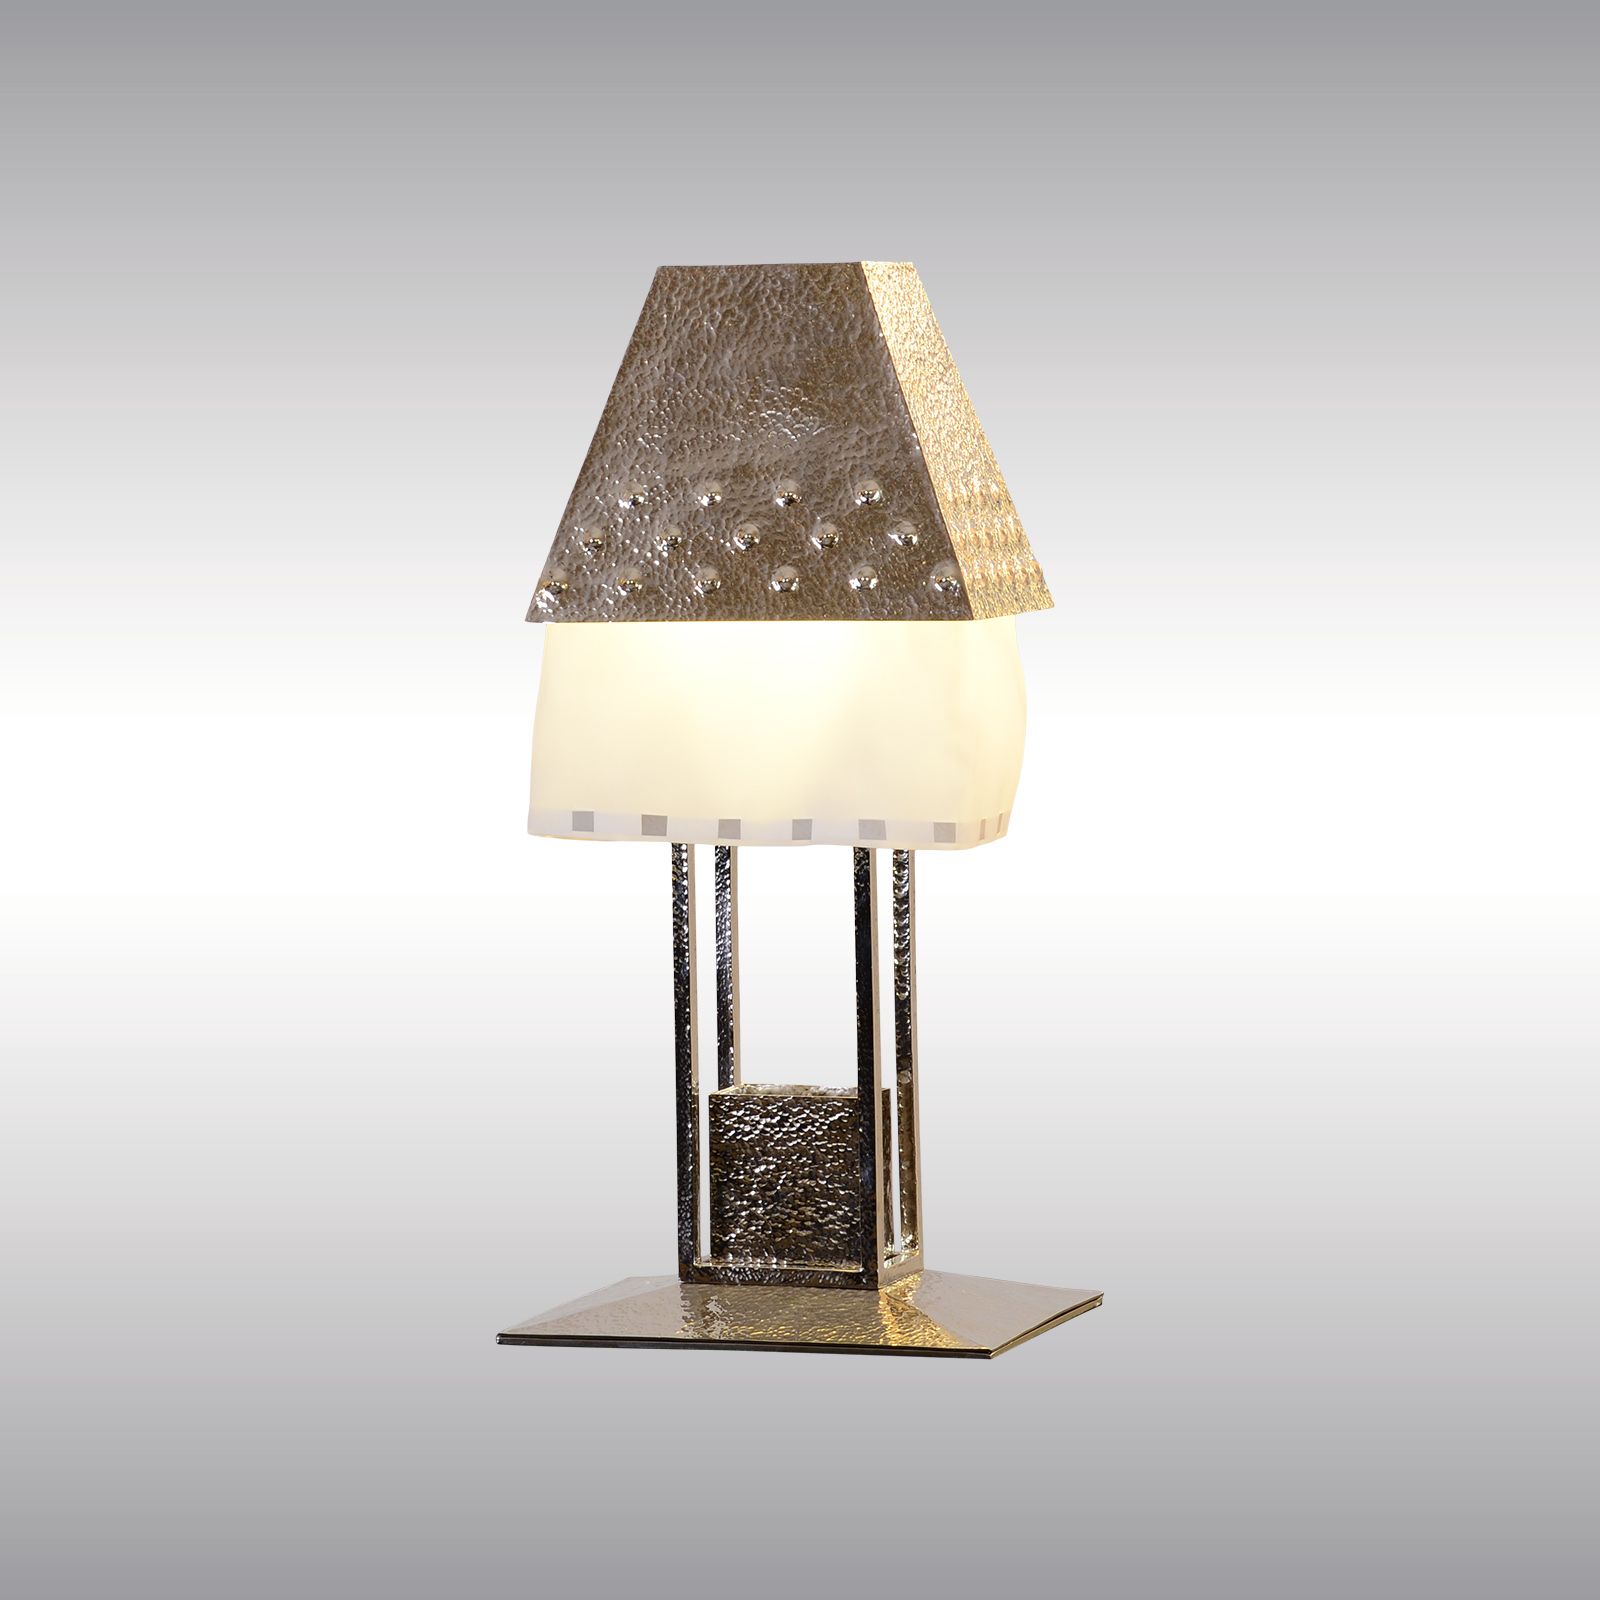 WOKA LAMPS VIENNA - OrderNr.: 21606|WW-Lamp - Design: Josef Hoffmann